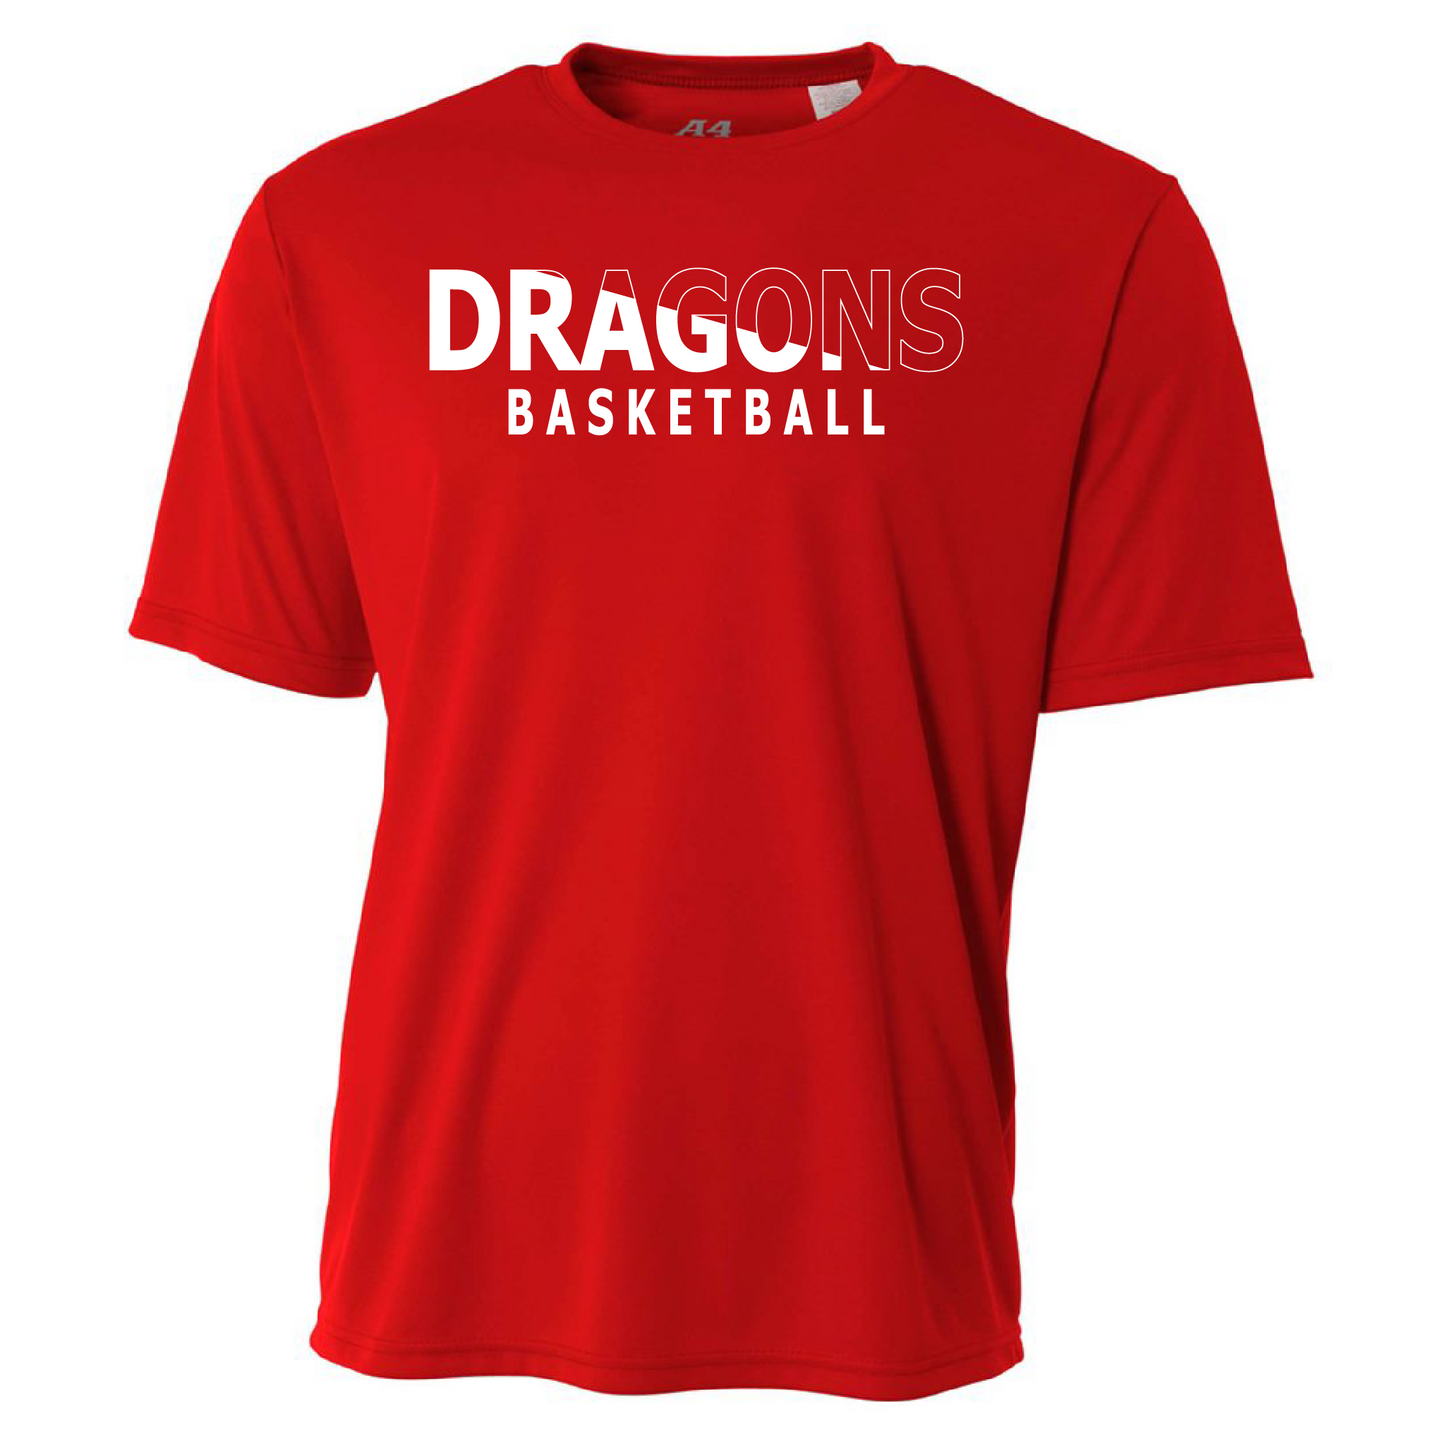 Mens S/S T-Shirt - Dragons Basketball Slashed White